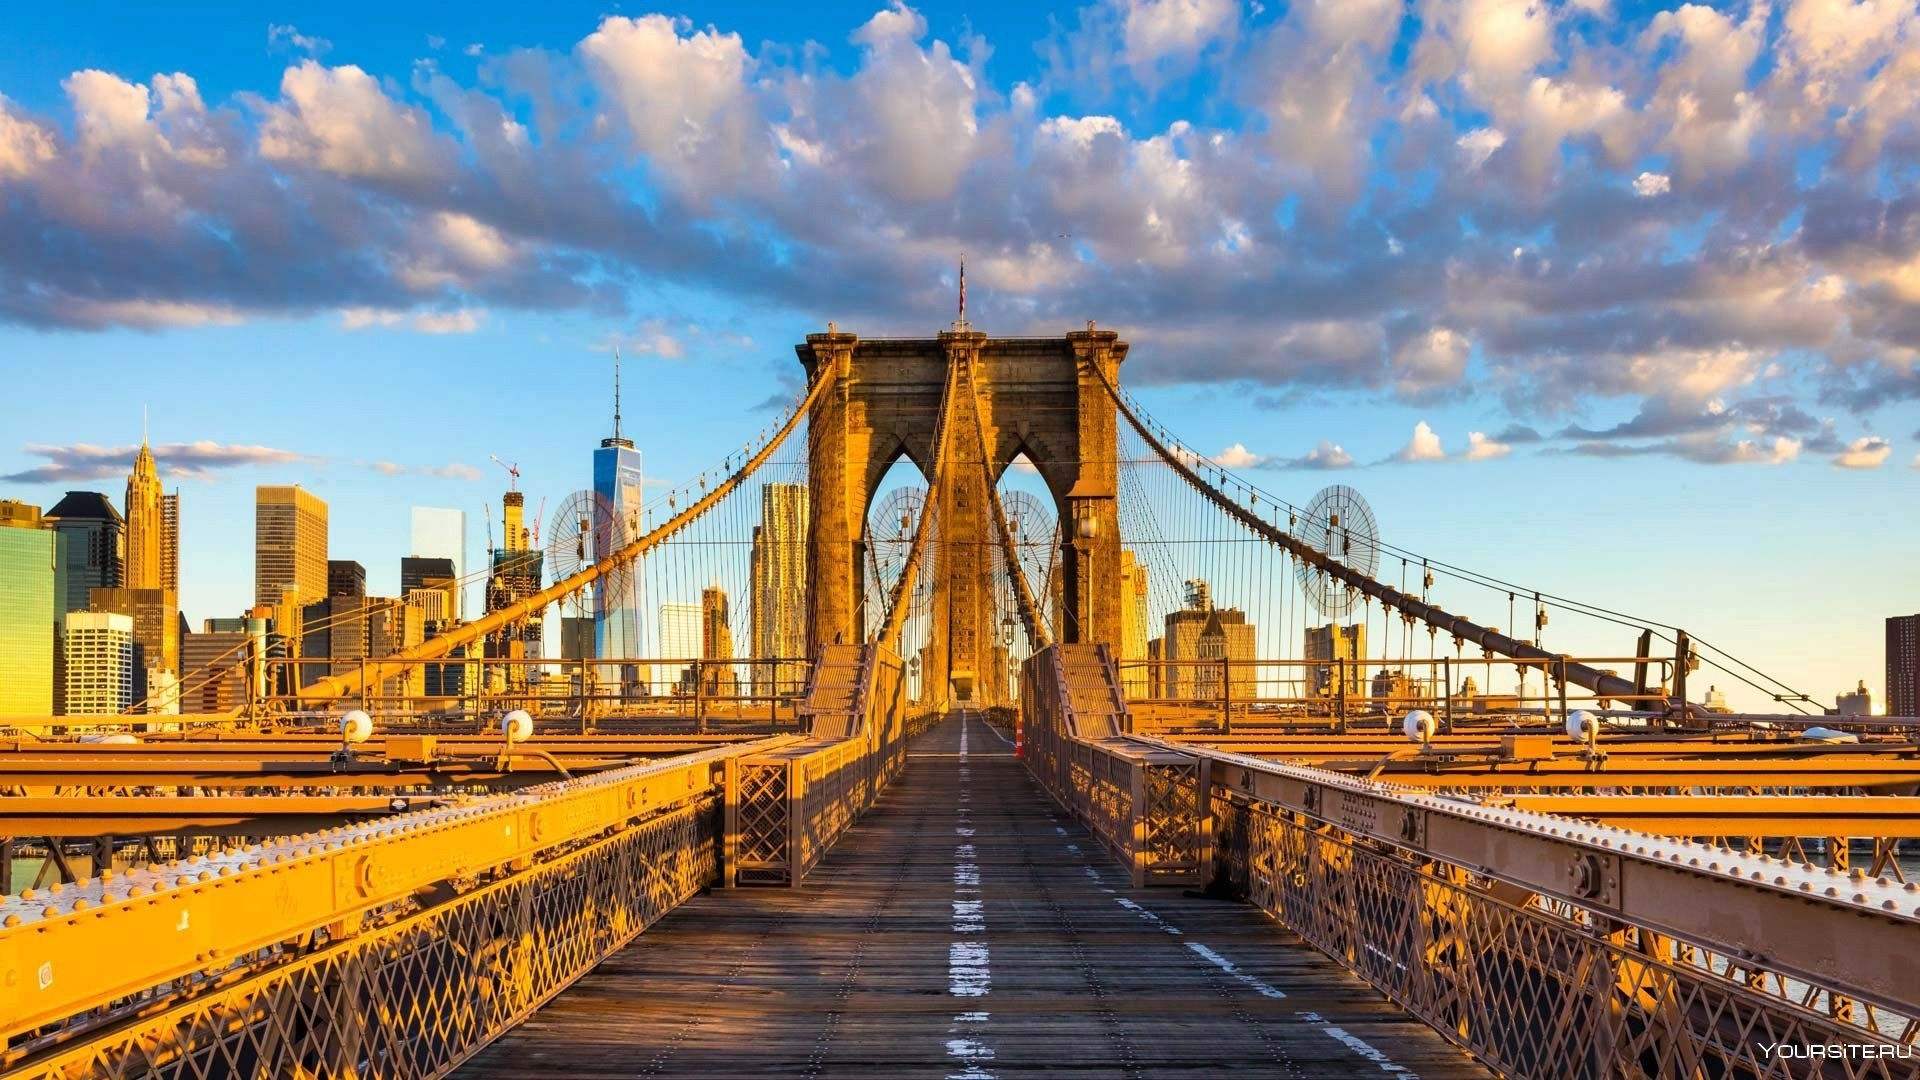 New most info. Бруклинский мост США. Бруклинский мост, Нью-Йорк, США. Буринский мост Нью-Йорк. New York Бруклинский мост.